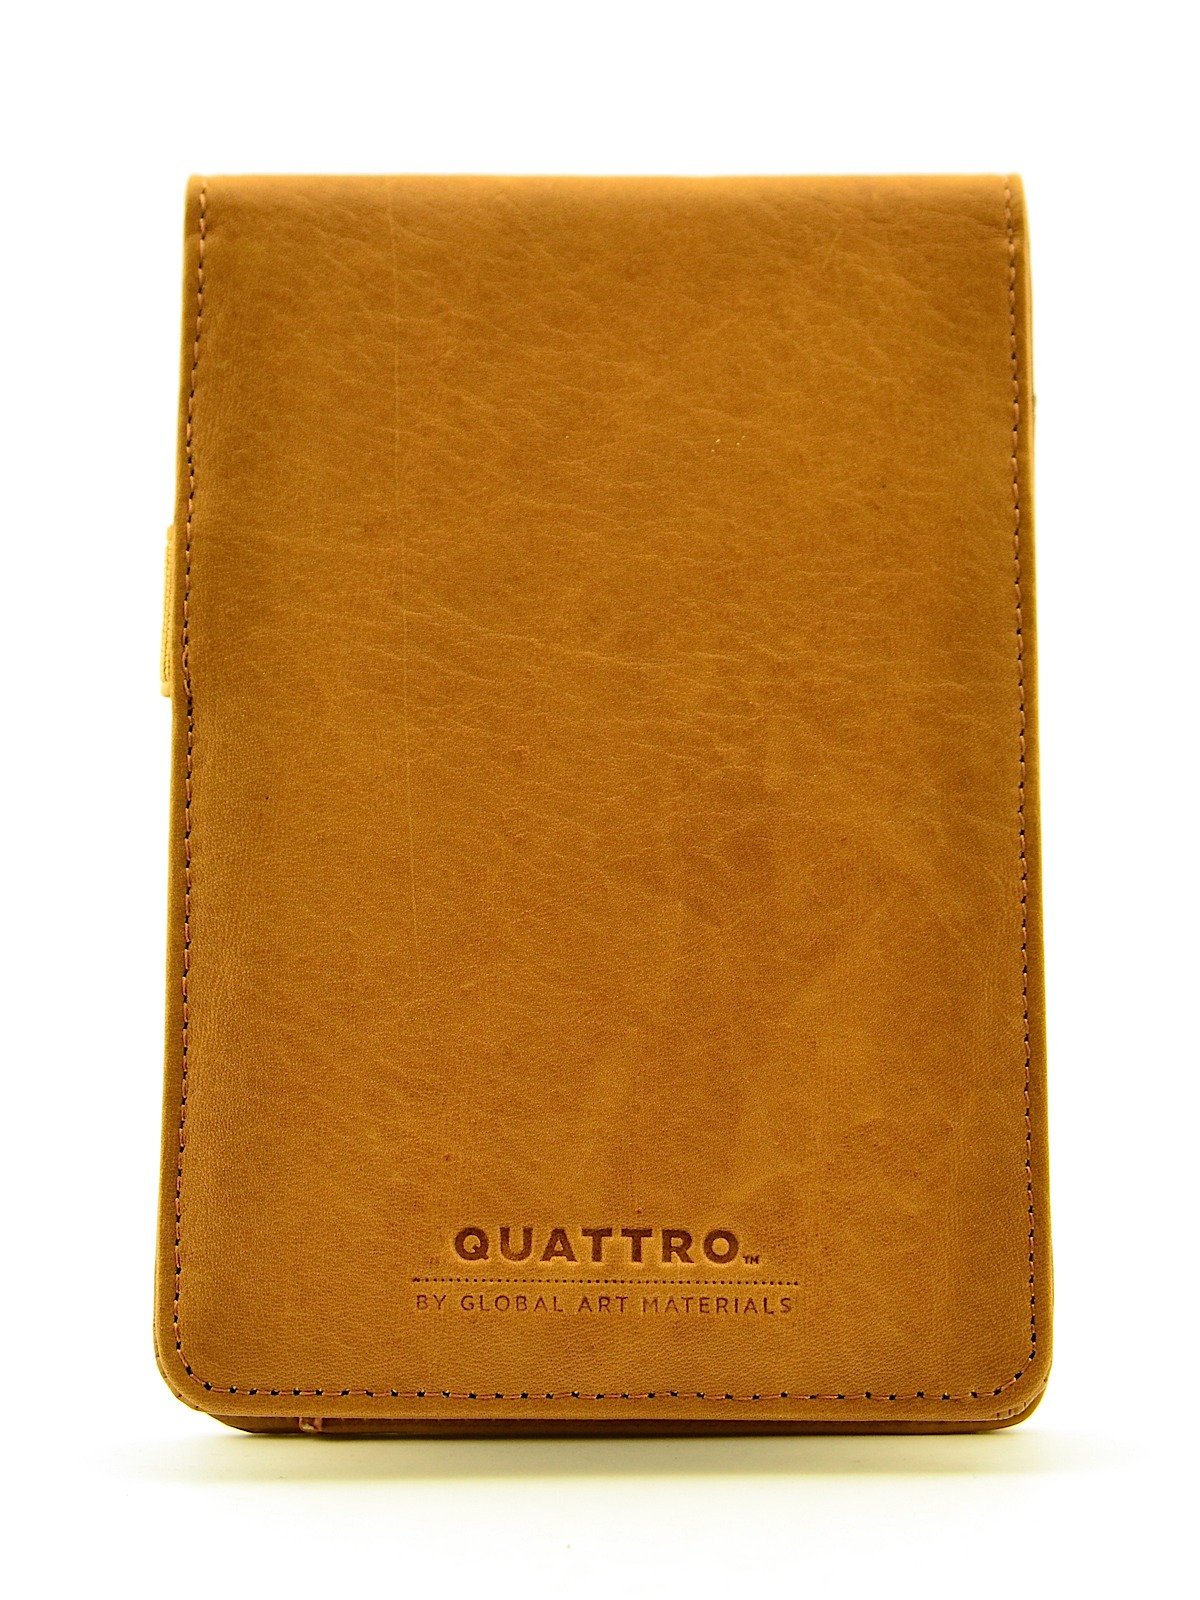 Quattro - Leather Covers